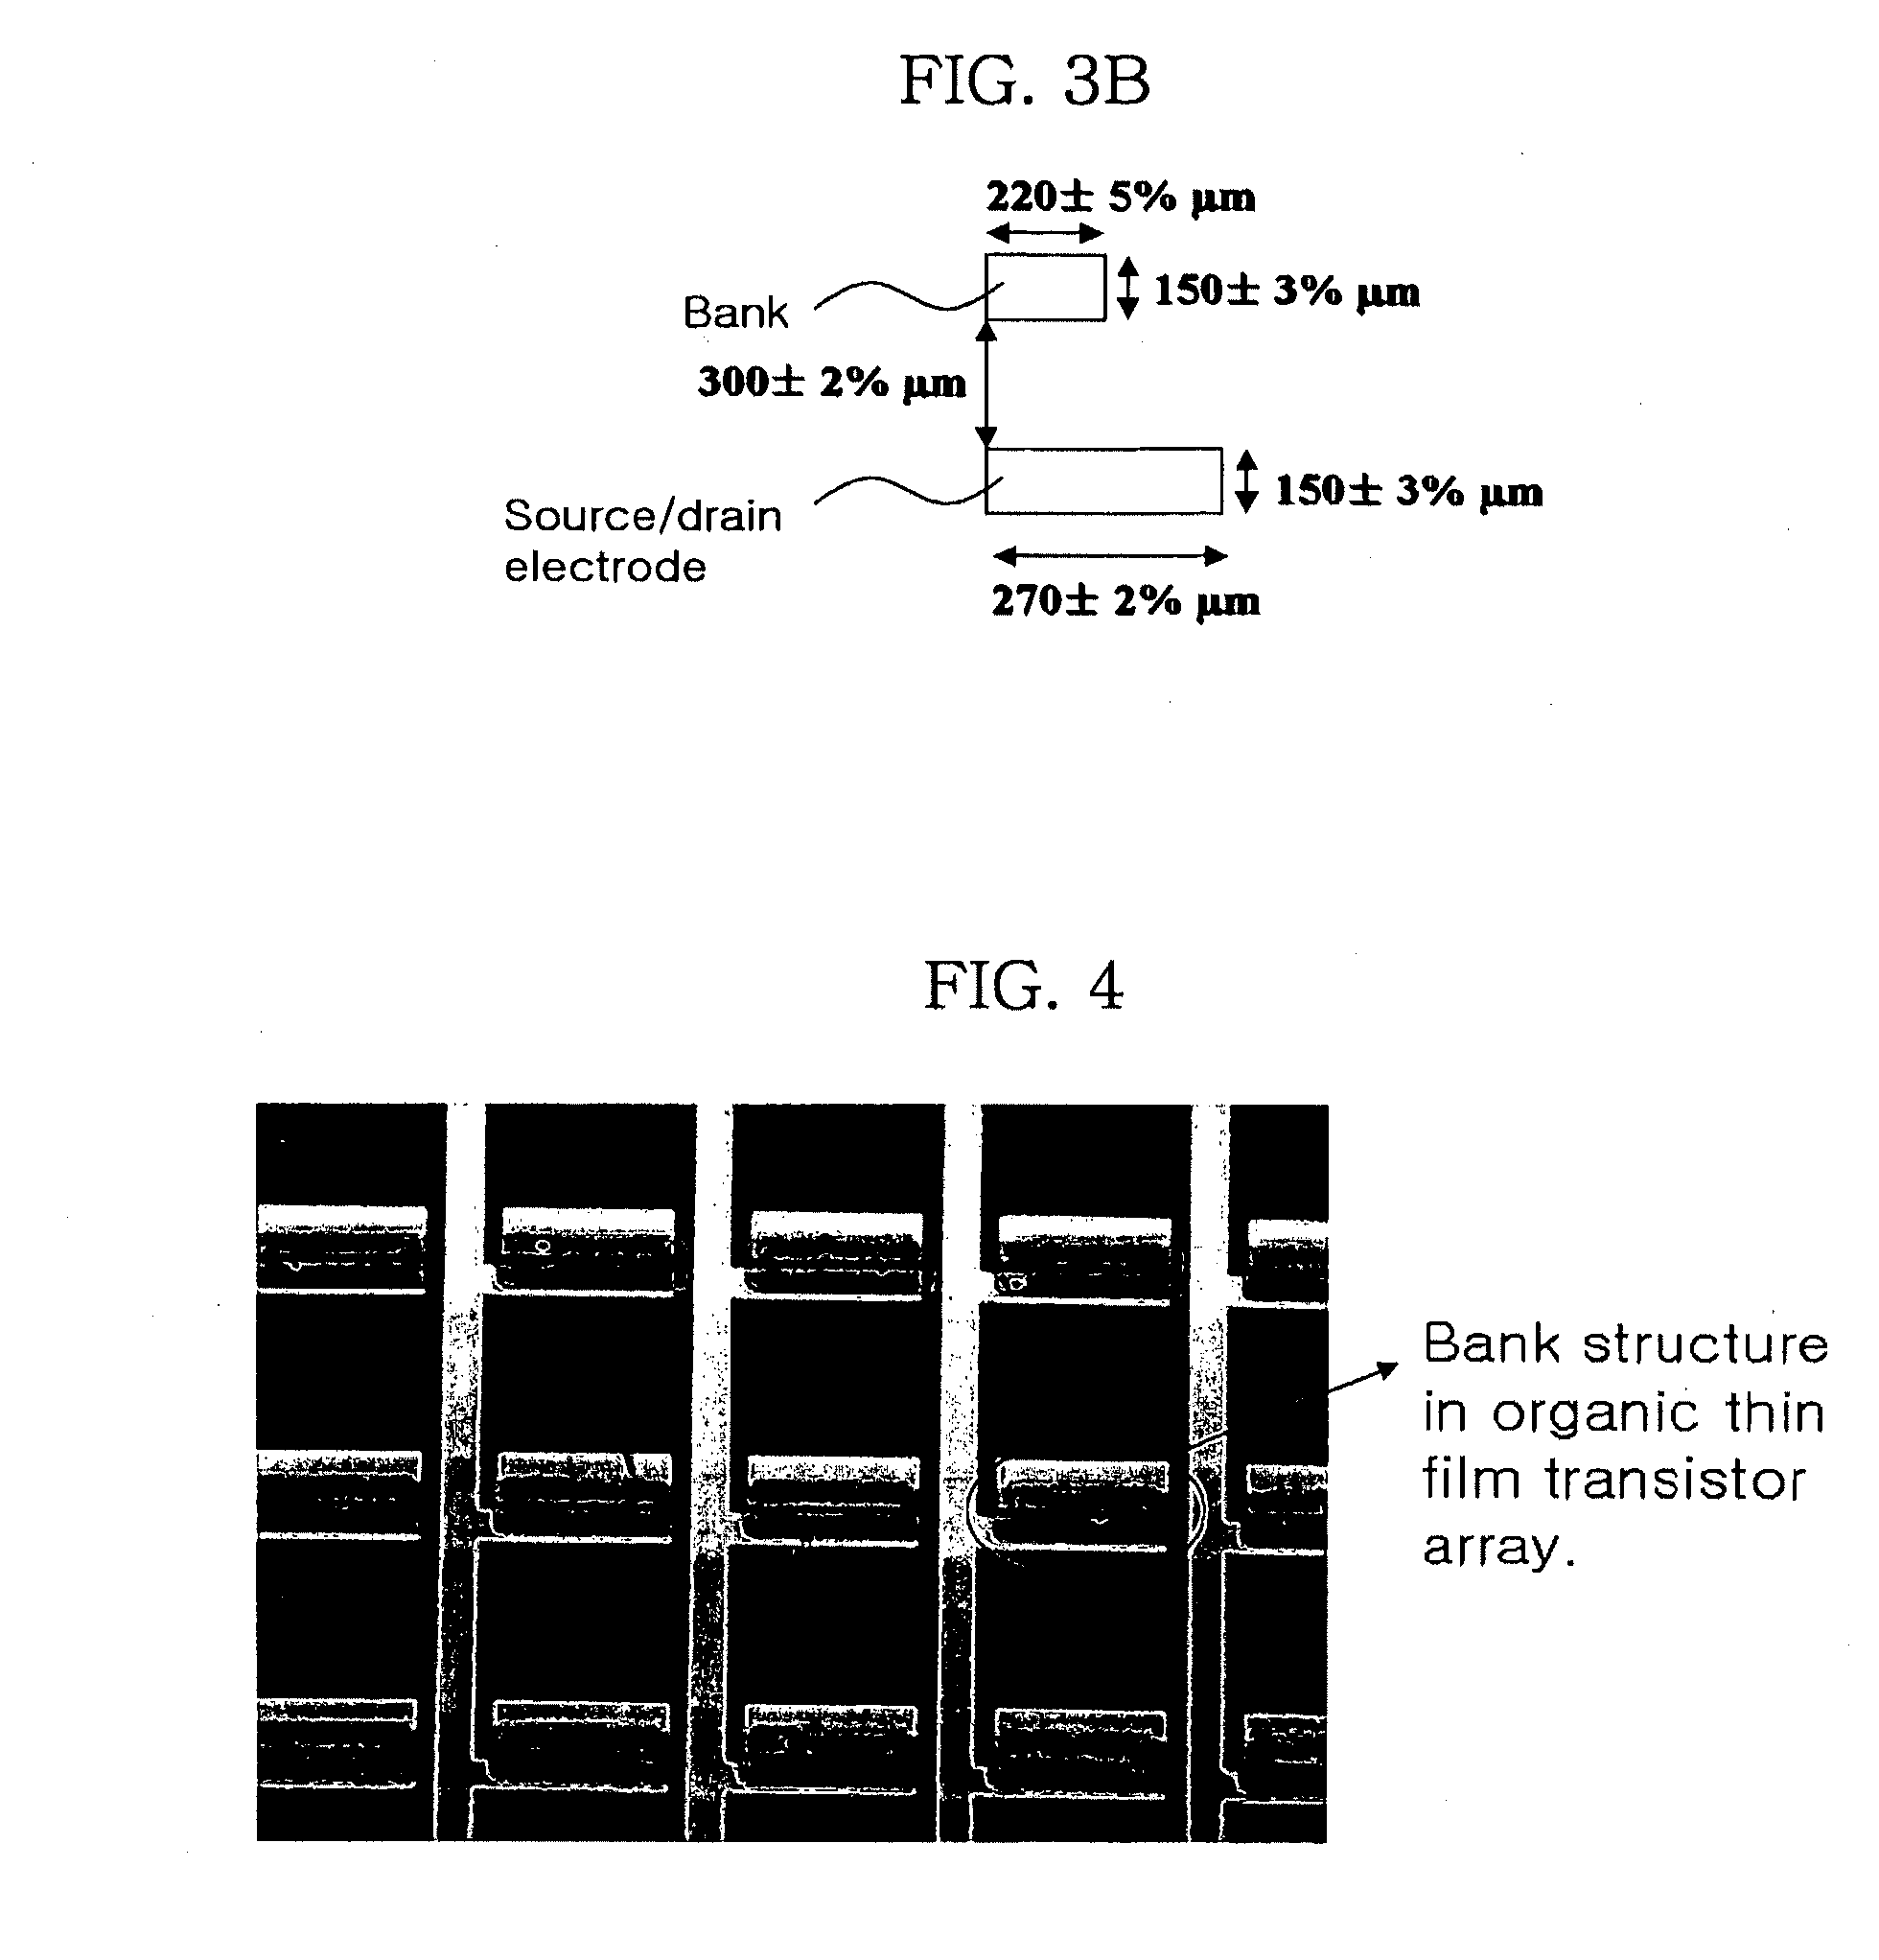 Methods of fabricating organic thin film transistors